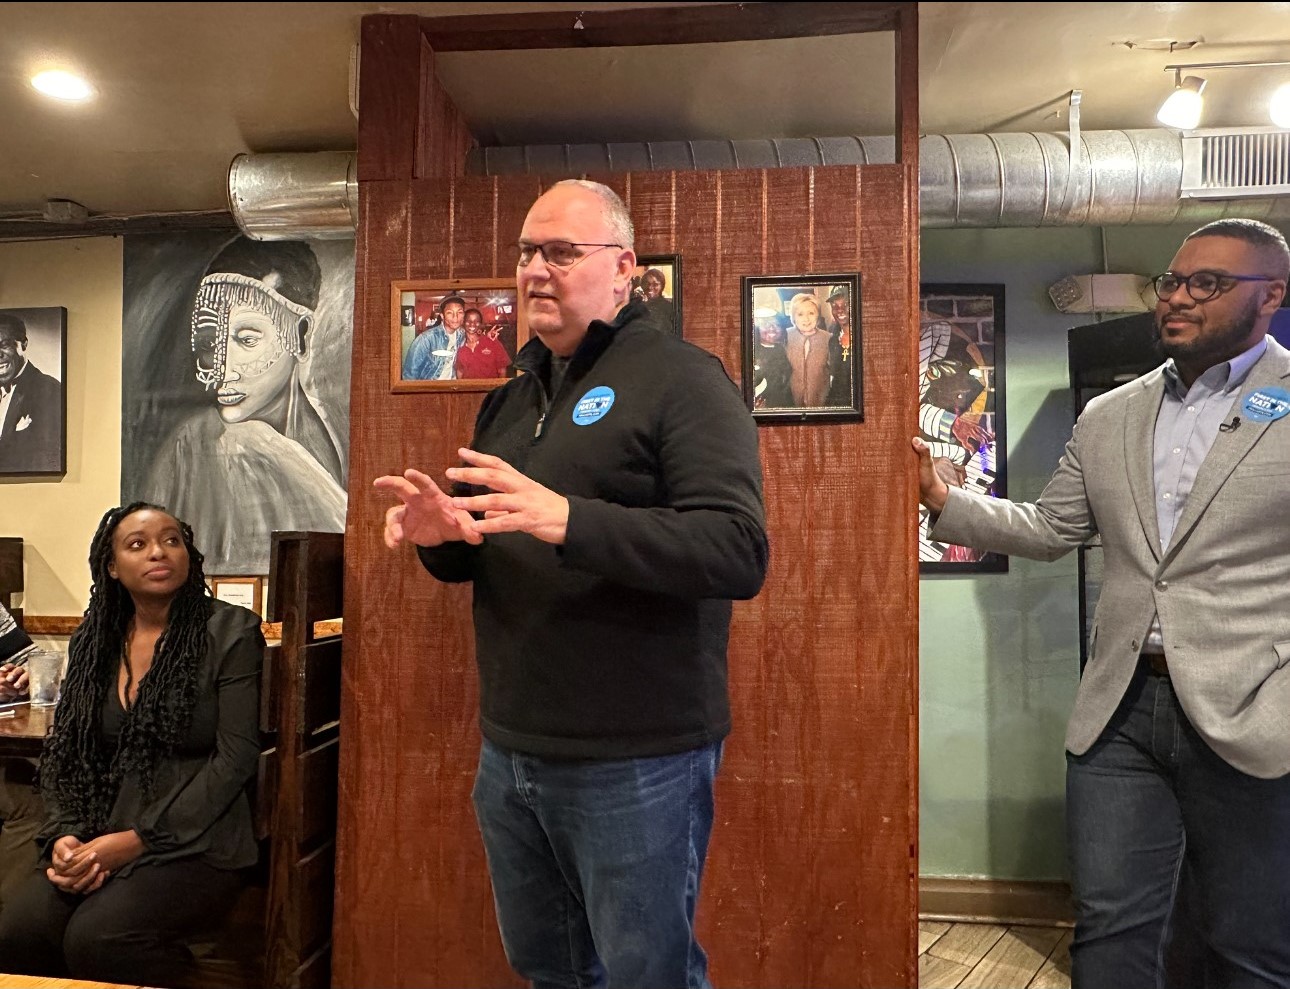 South Carolina Democrats executive director Jay Parmley (center) speaks at Hannibal's Kitchen in South Carolina, while Pennsylvania Lt. Gov. Austin Davis (right) looks on.